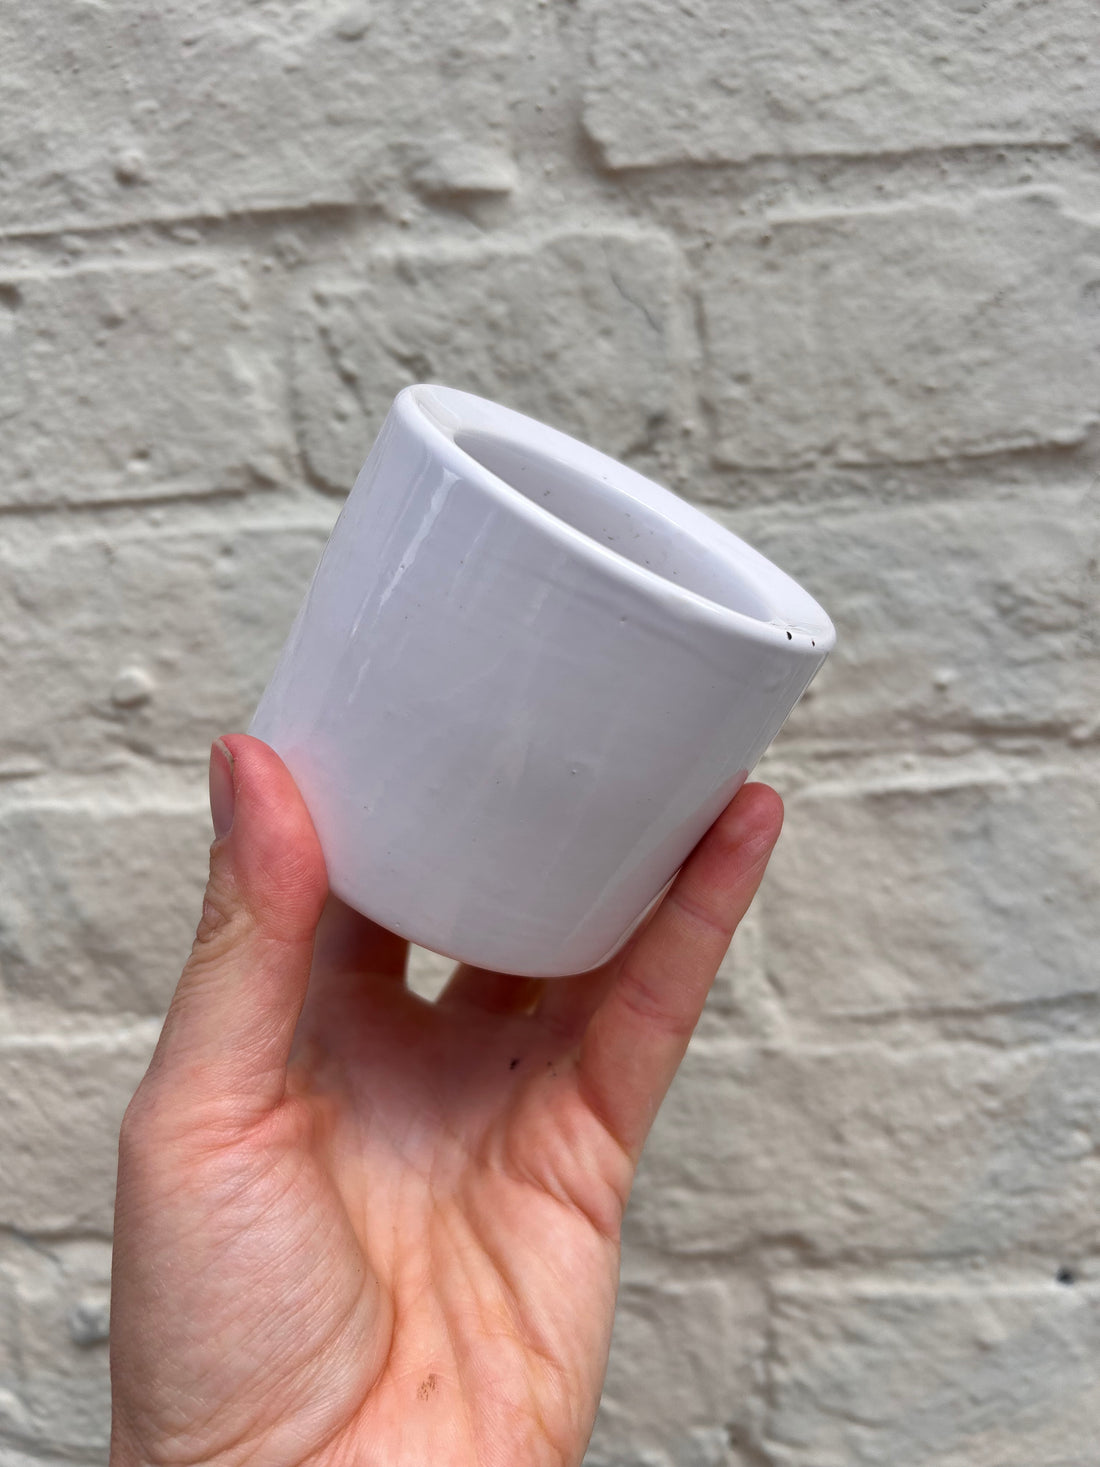 Small ceramic pots to house nursery pots 6cm diameter or below